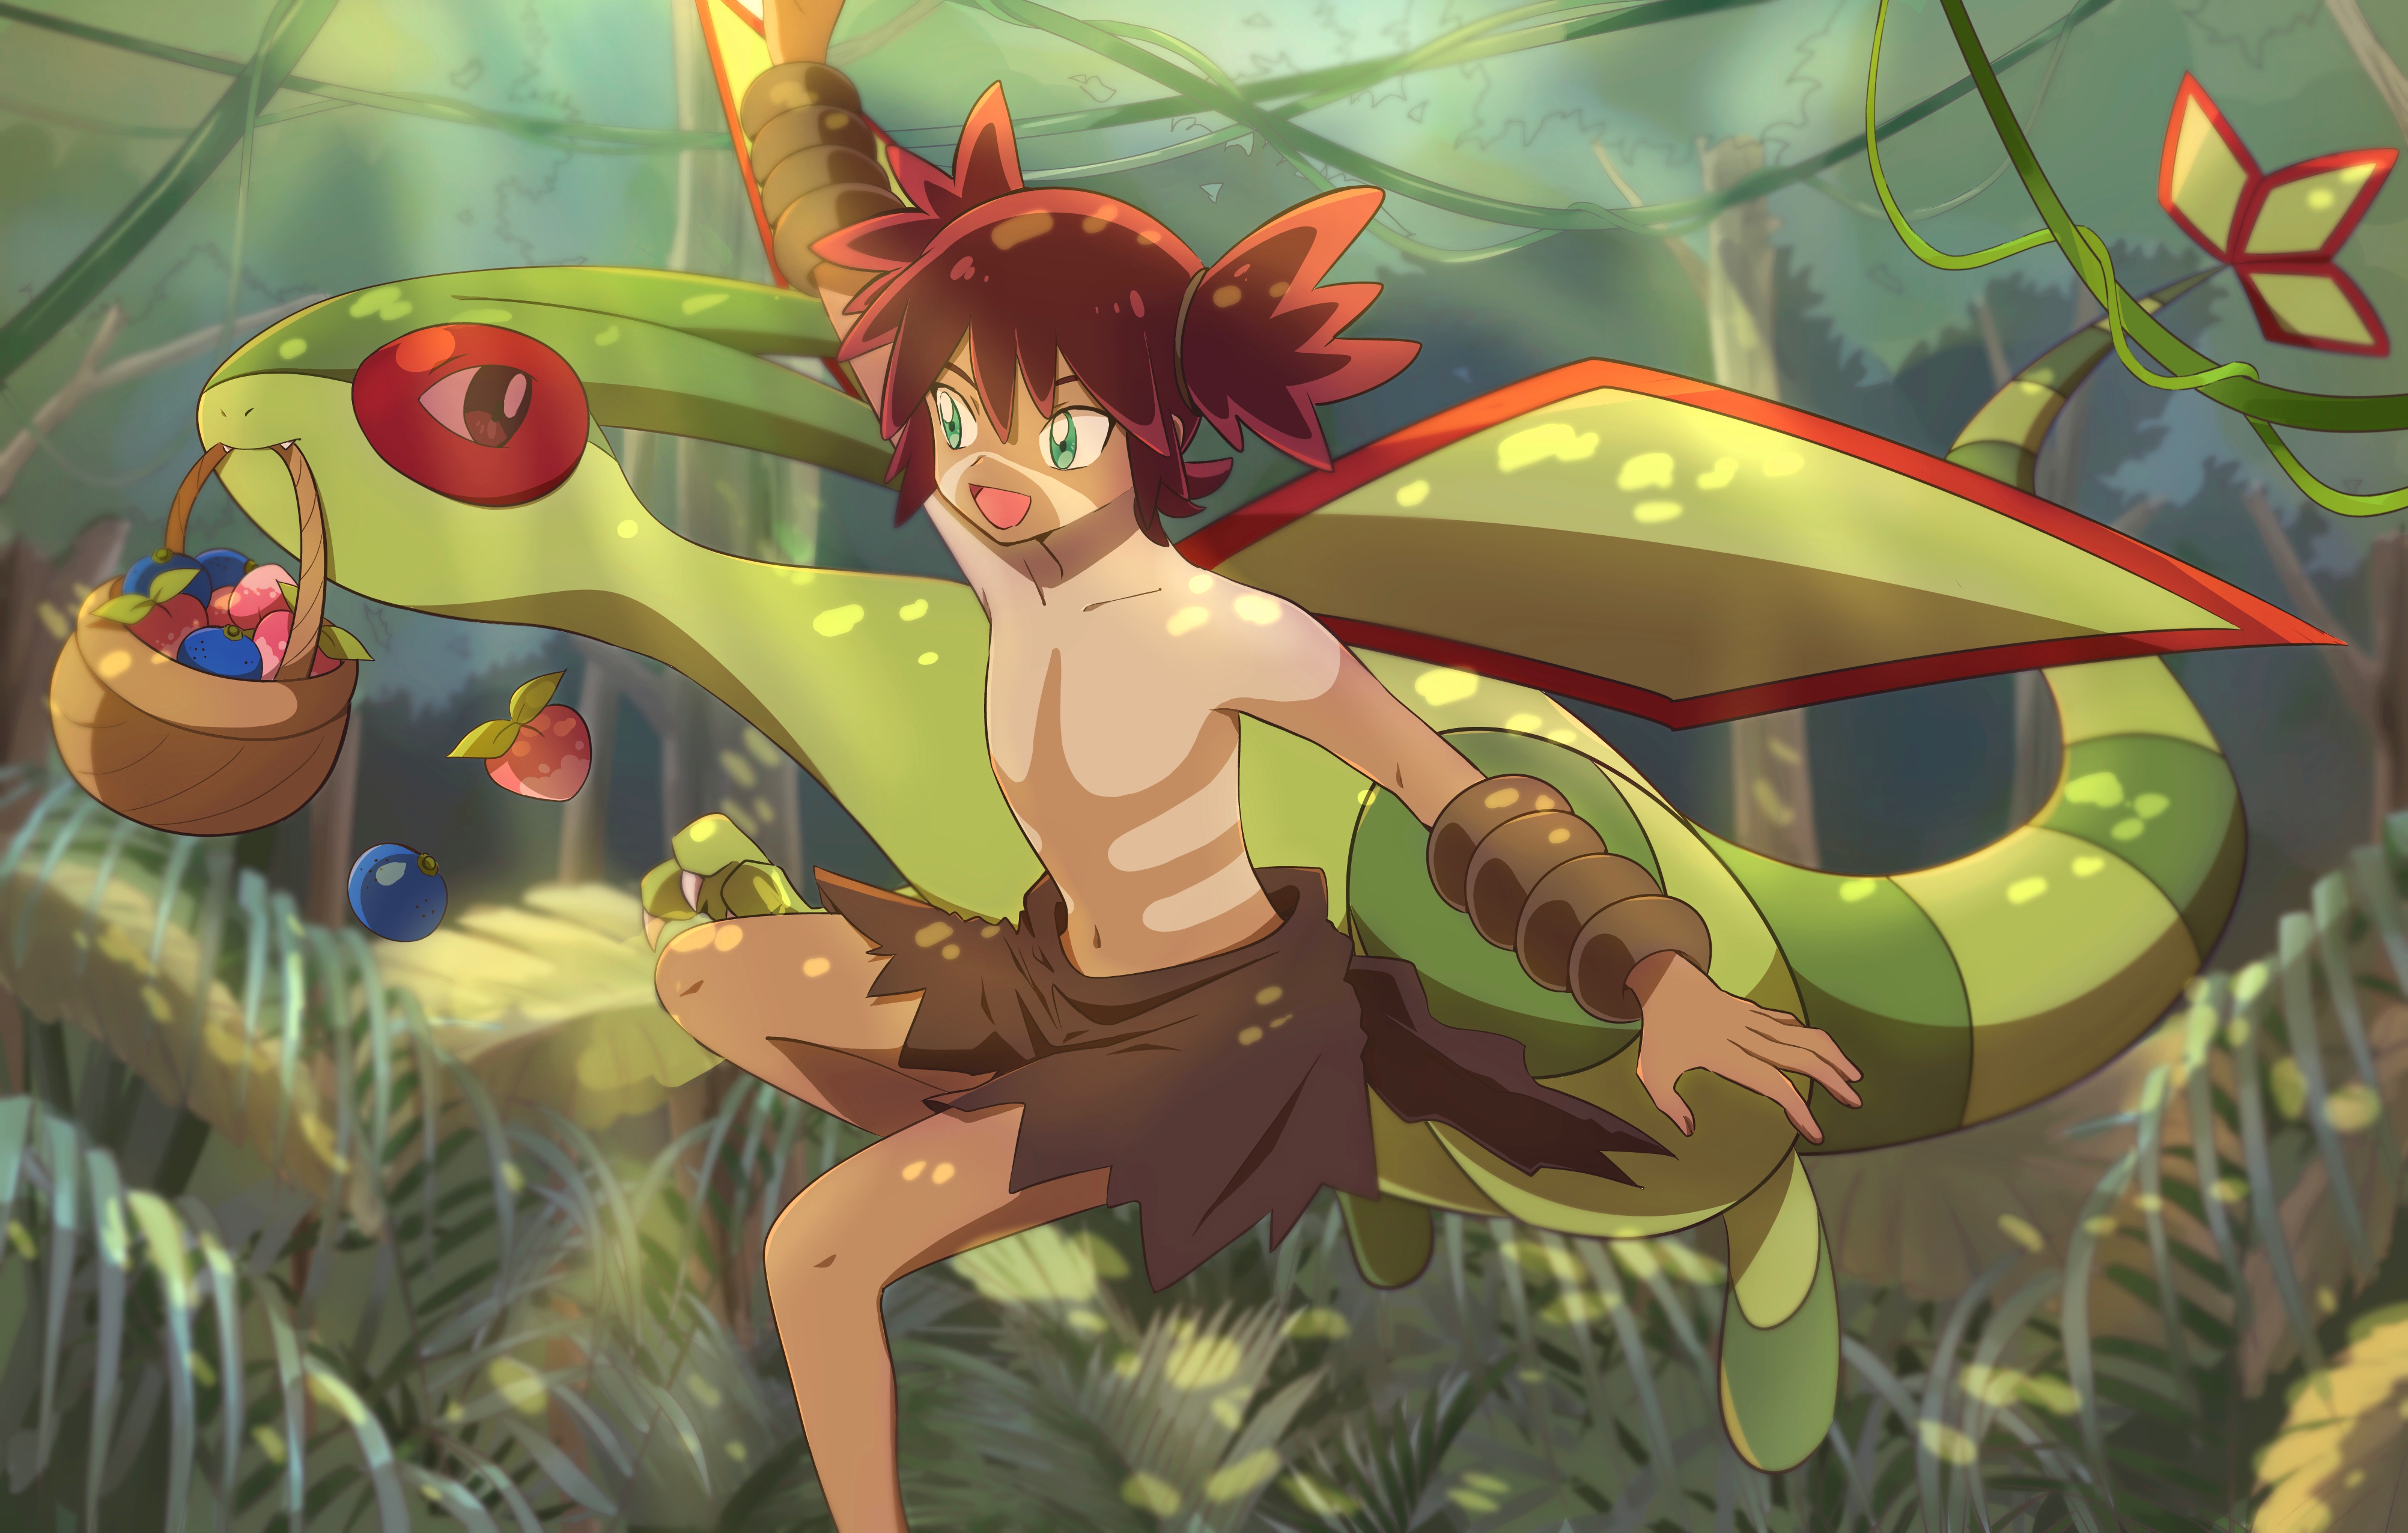 Anime Pokémon the Movie: Secrets of the Jungle HD Wallpaper | Background Image